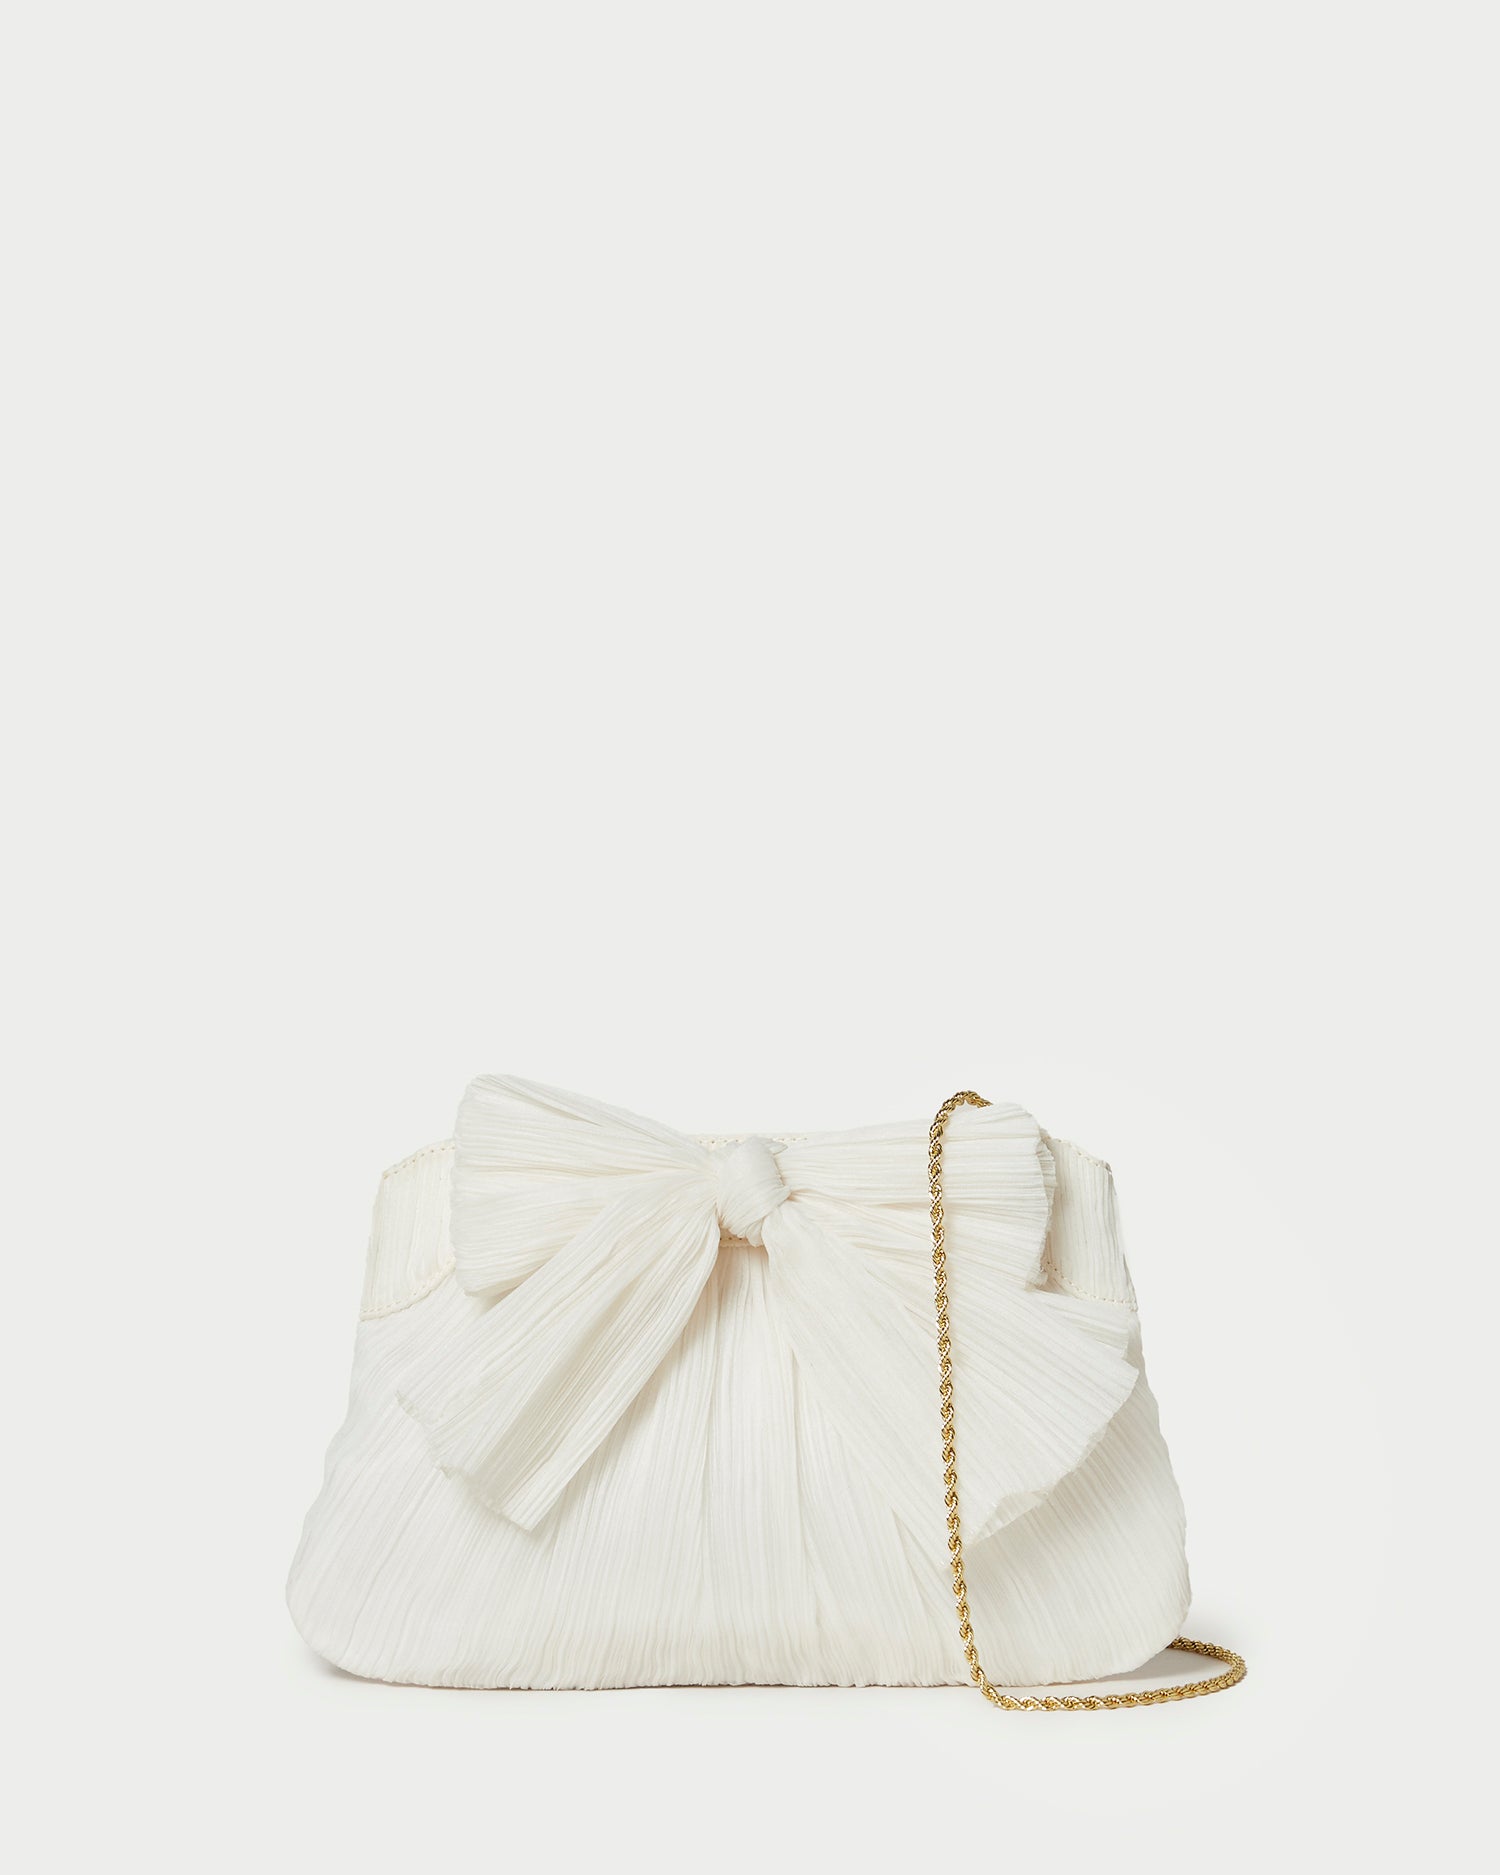 Black Satin Bow Monroe Clutch Bag | Lulu Guinness